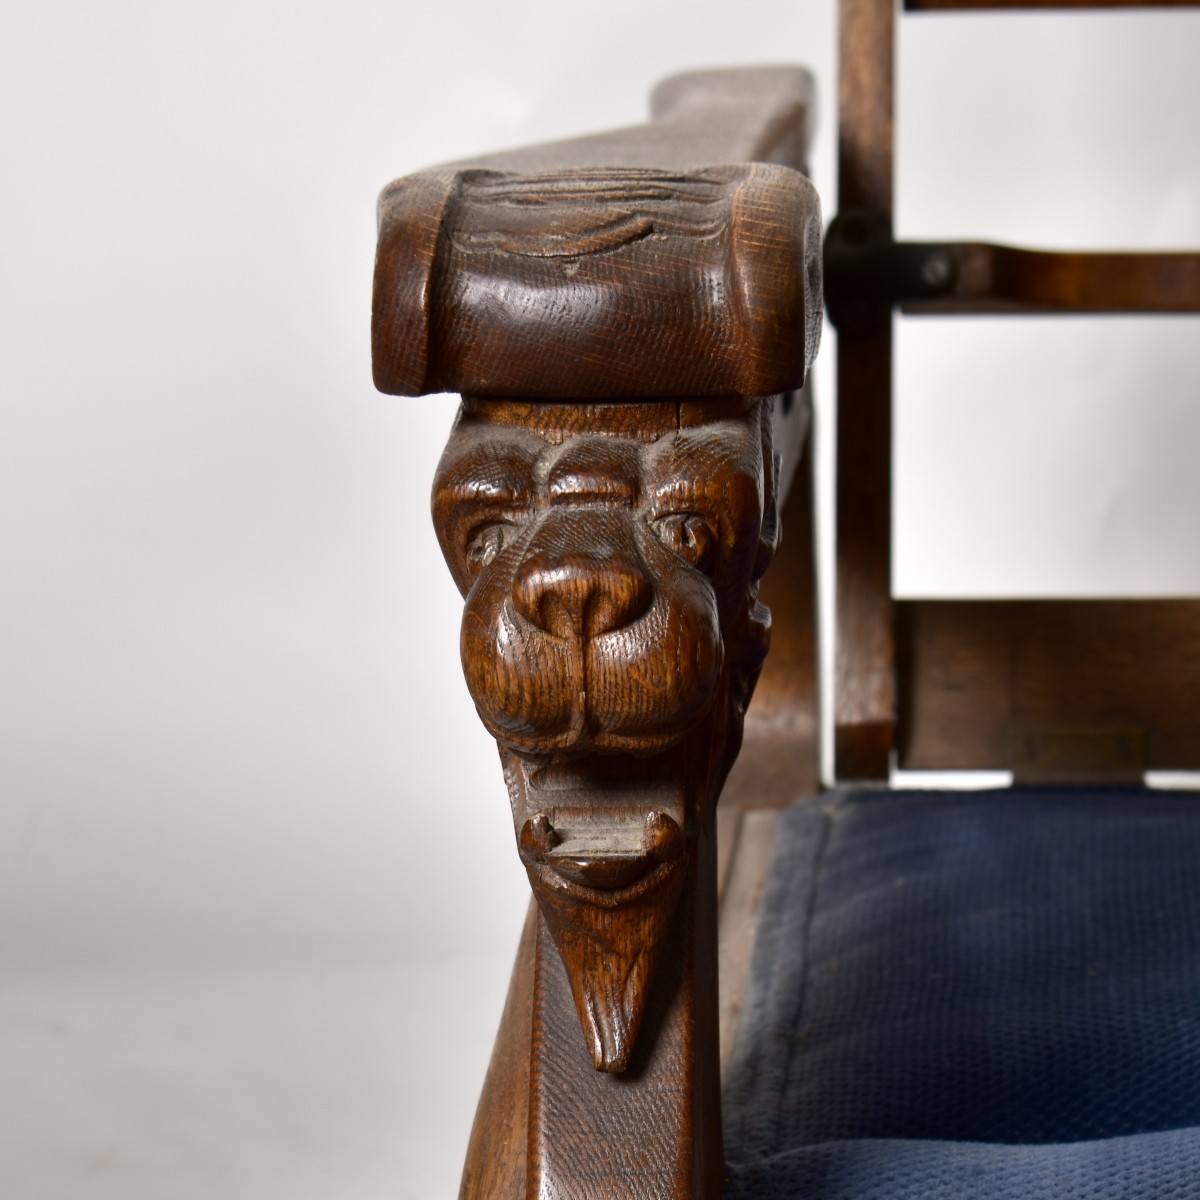 Antique Morris Recliner Chair